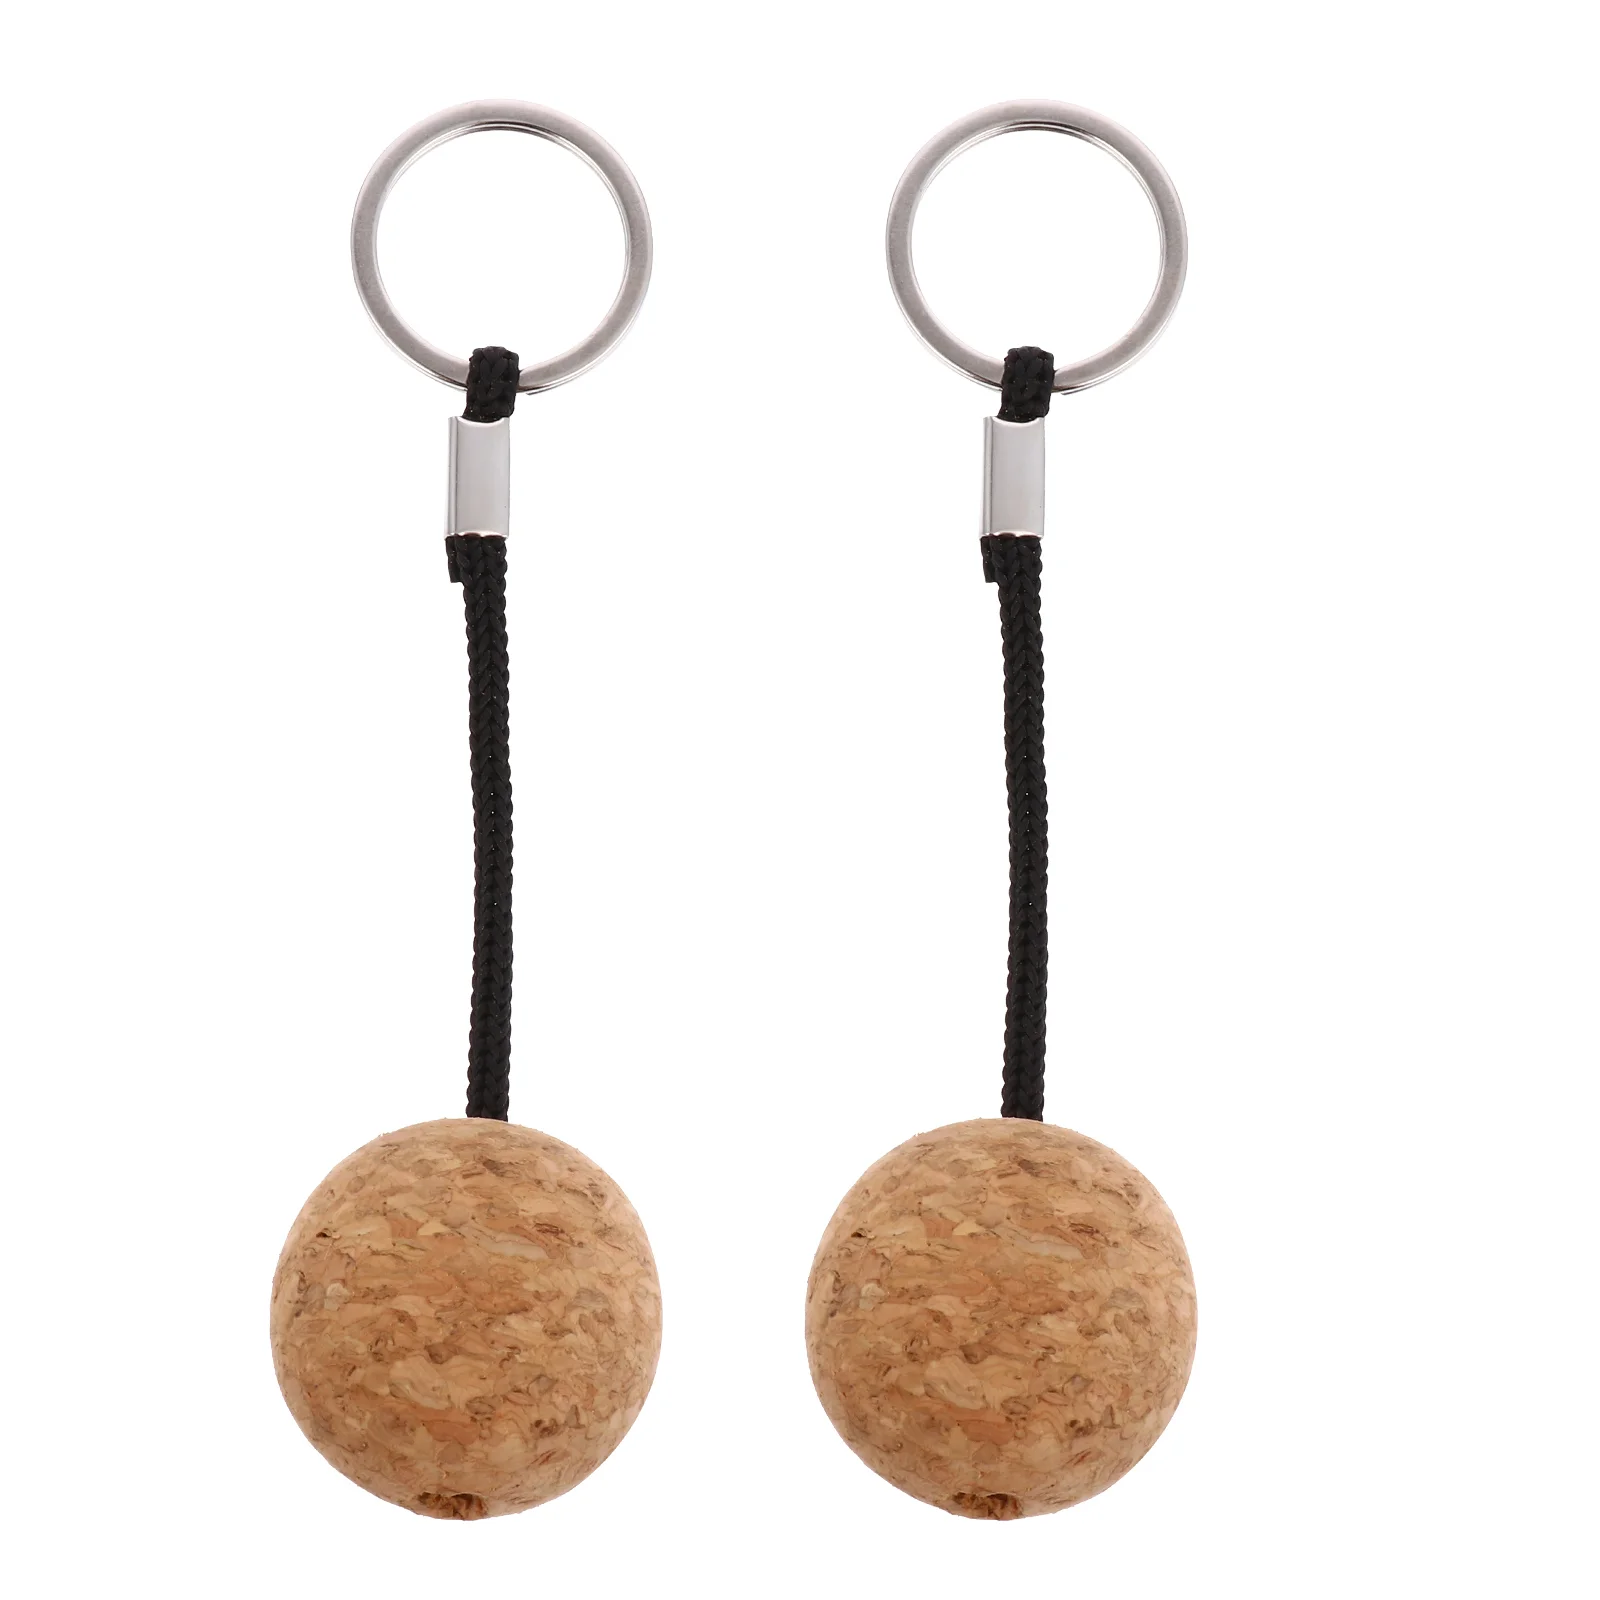 

2 Pcs Cork Float Floating Ball Key Chain Floatable Keychain Keys Fishing Keyring Wooden Kayak accessories